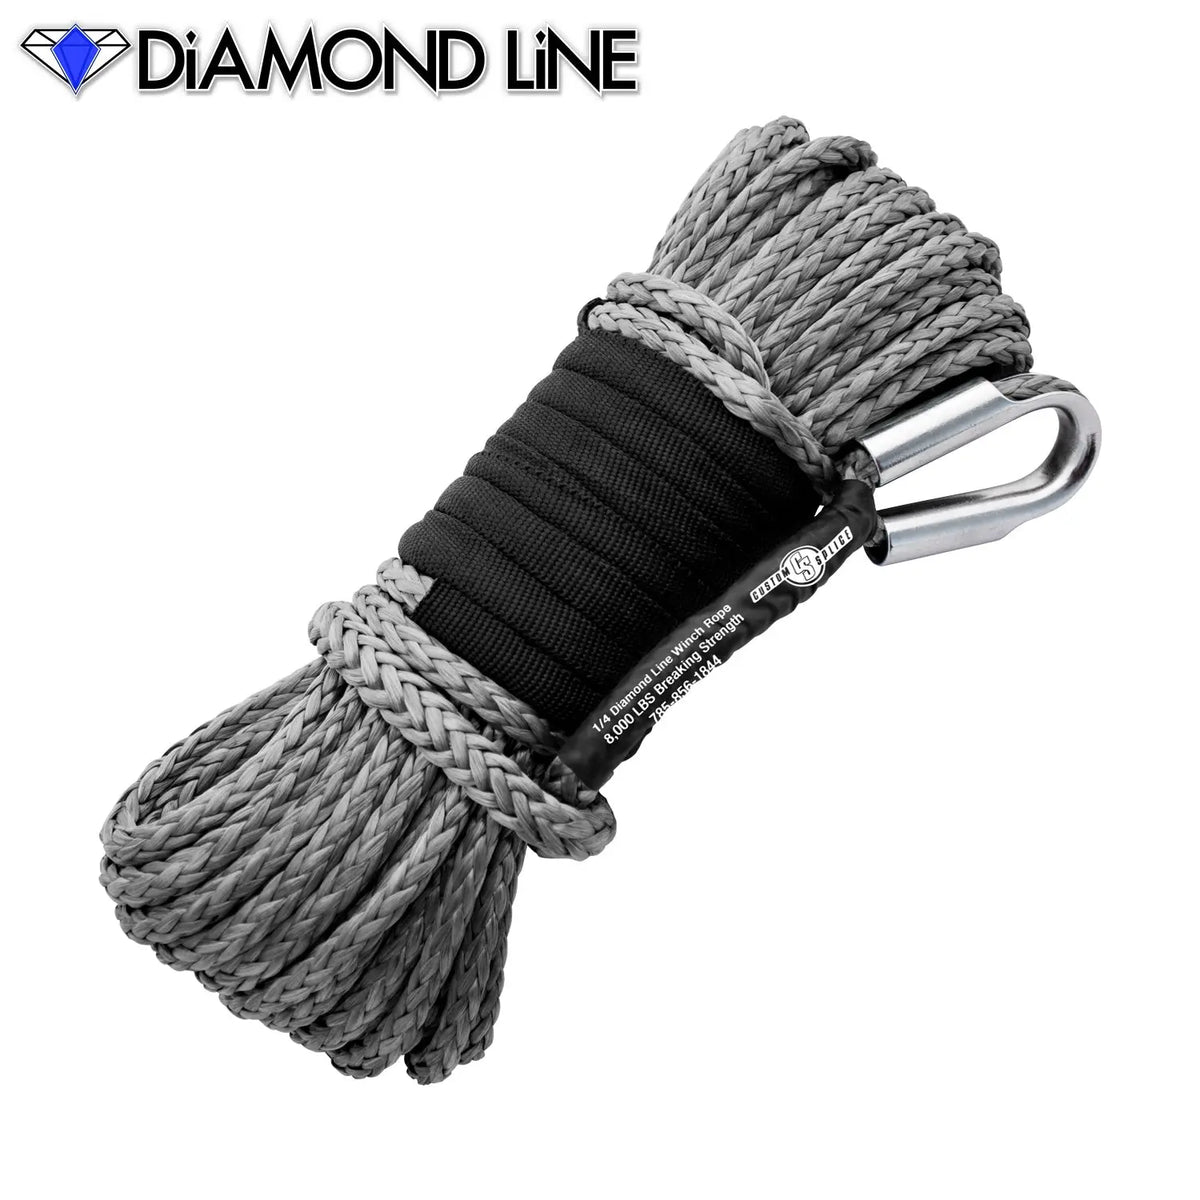 SxS UTV Diamond Line Rope / Fairlead Bundle 1/4" X 55' Custom Splice - Diamond Line